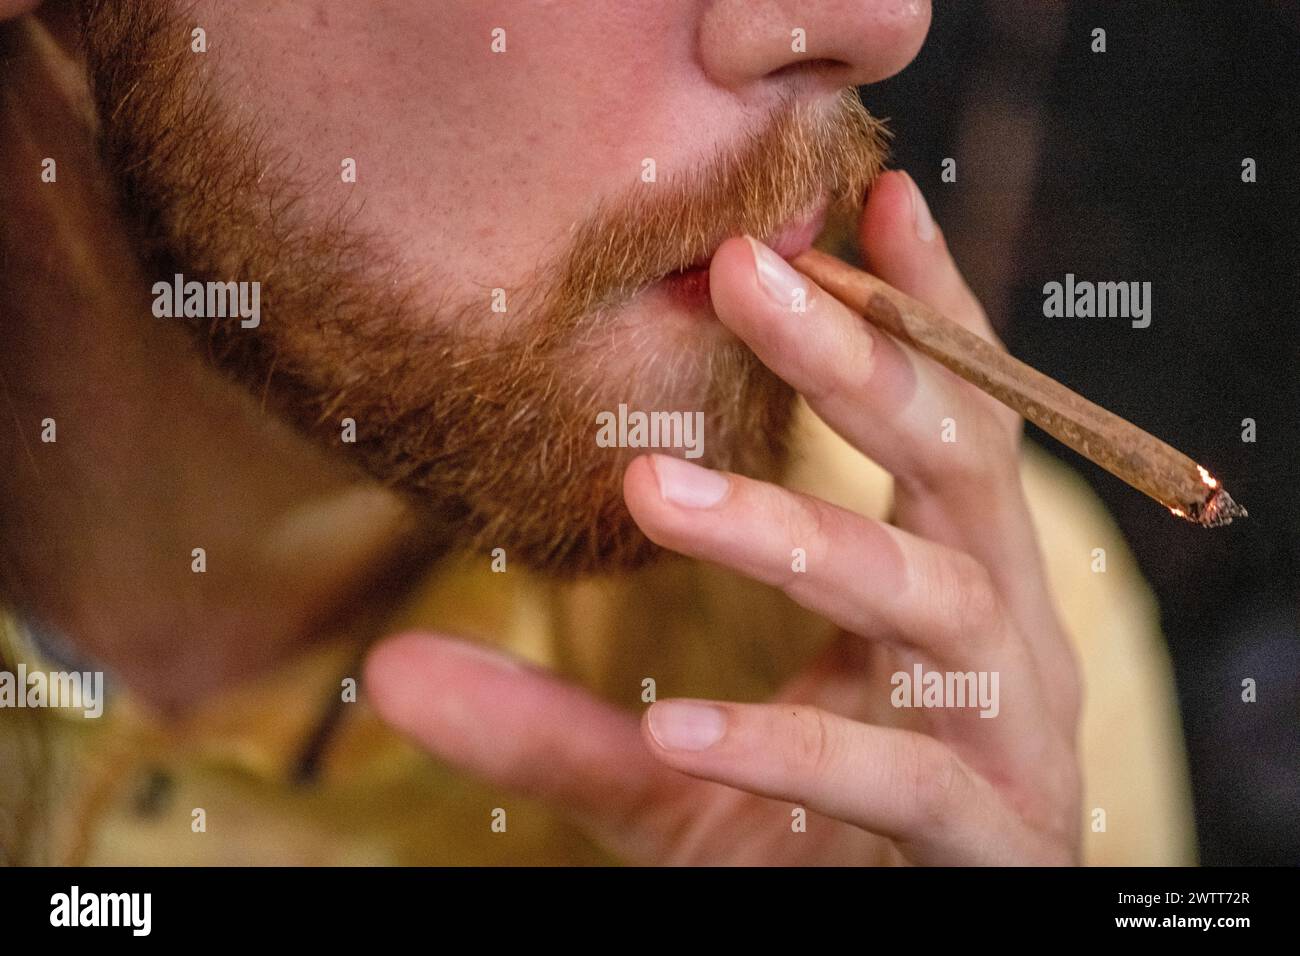 Closeup of a person enjoying a leisurely smoke. Stock Photo